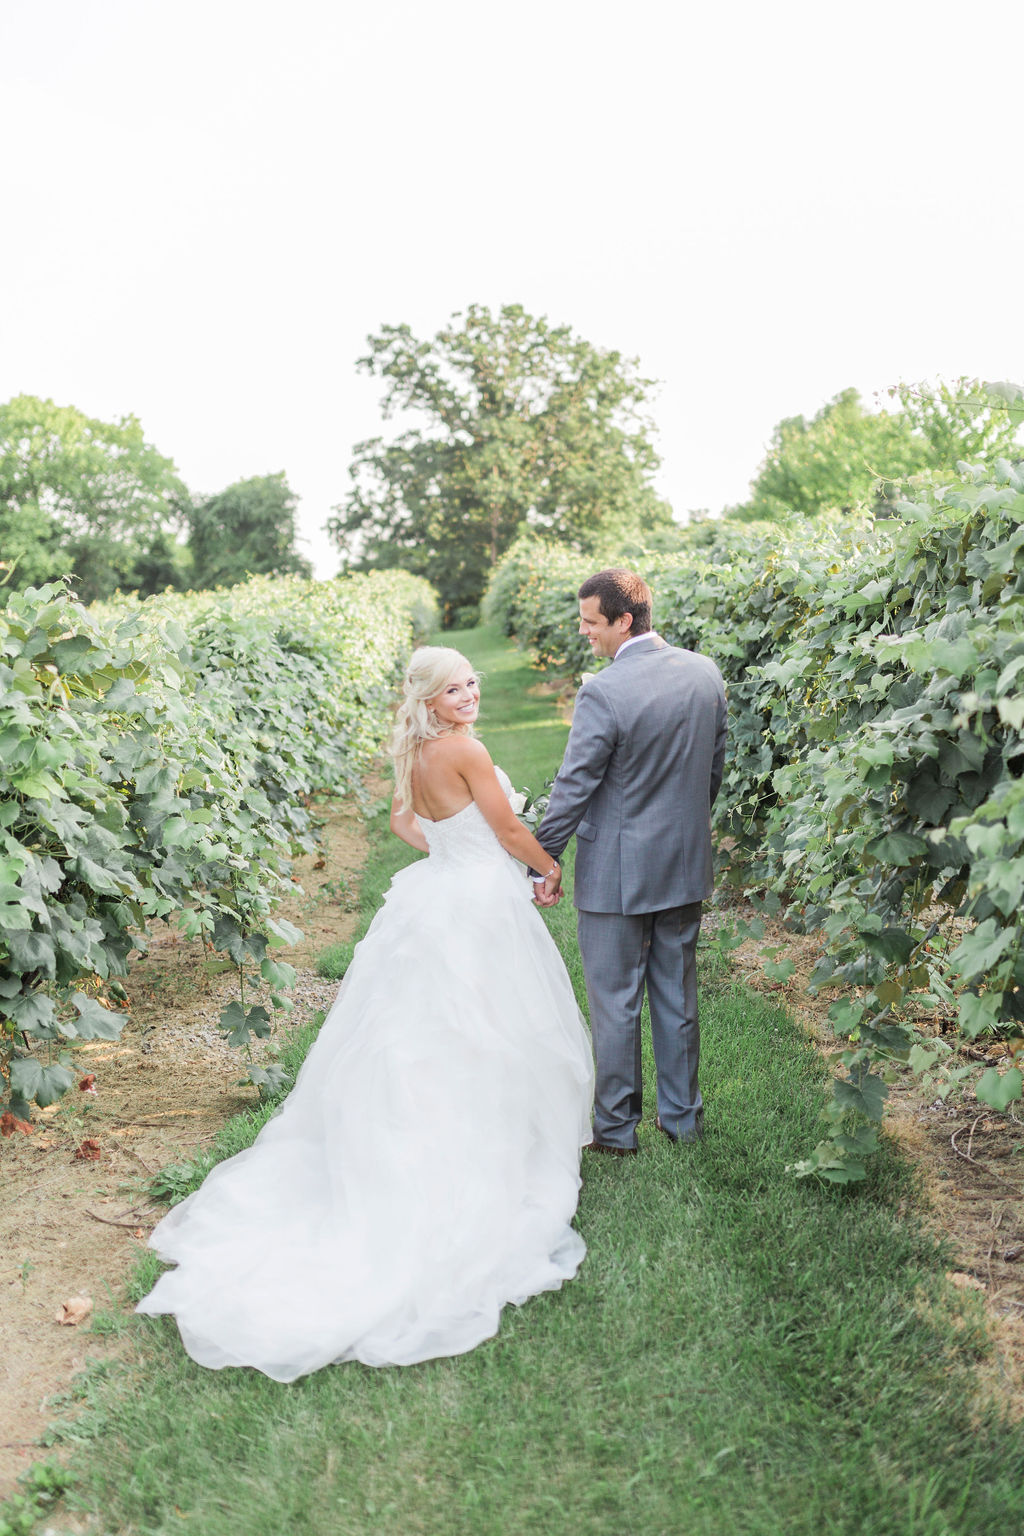 A Rustic Virginia Barn Wedding - Stable at Bluemont Vineyards Wedding - The Overwhelmed Bride Wedding Blog